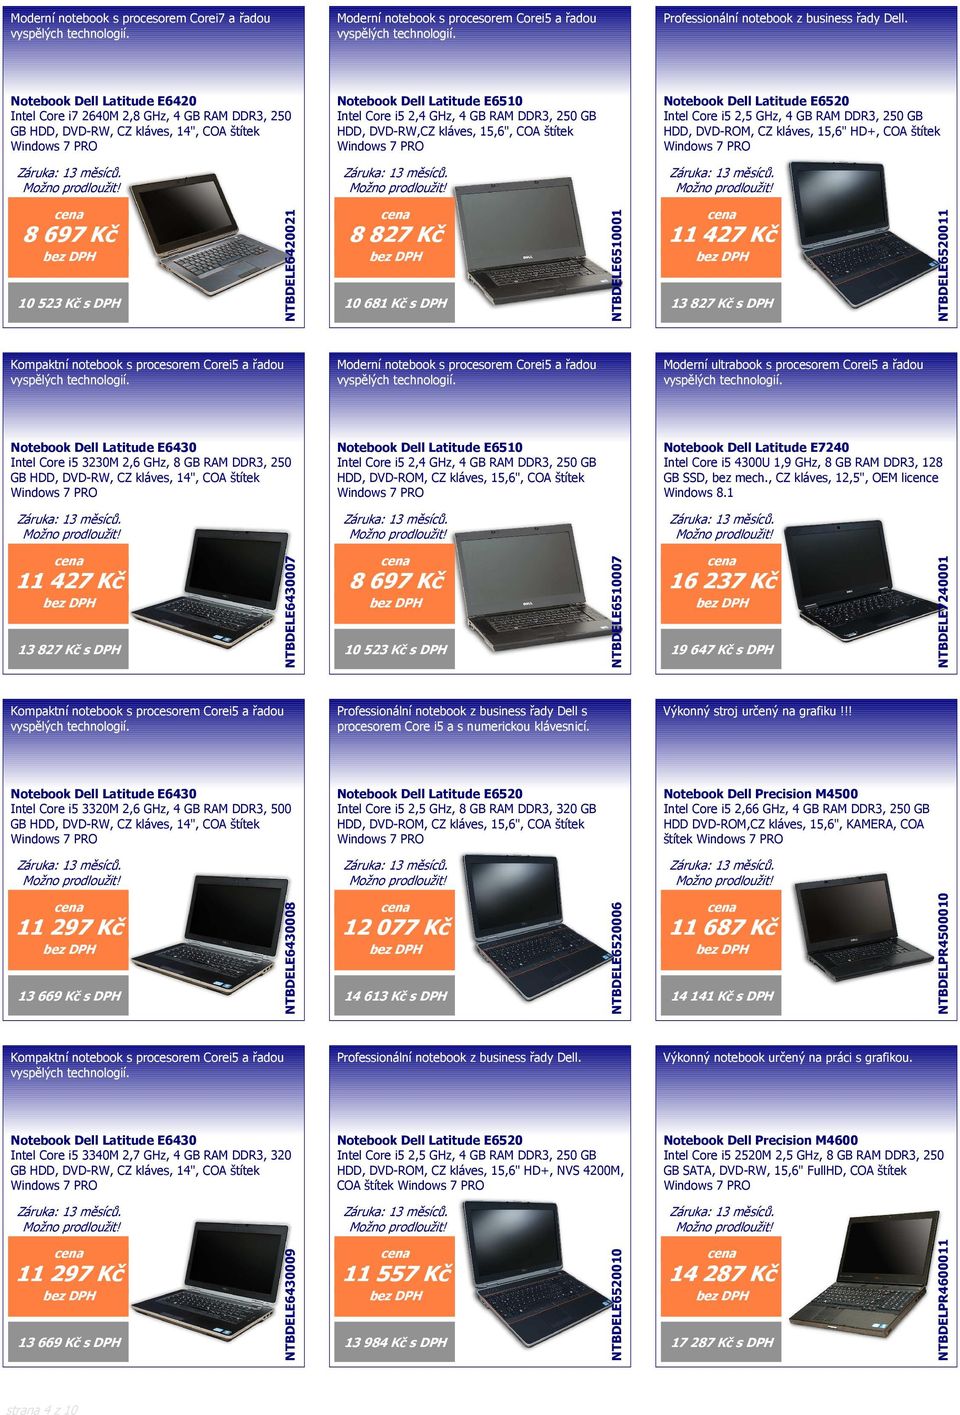 Notebook Dell Latitude E6520 Intel Core i5 2,5 GHz, 4 GB RAM DDR3, 250 GB HDD, DVD-ROM, CZ kláves, 15,6" HD+, COA štítek 8 697 Kč 10 523 Kč s DPH NTBDELE6420021 8 827 Kč 10 681 Kč s DPH